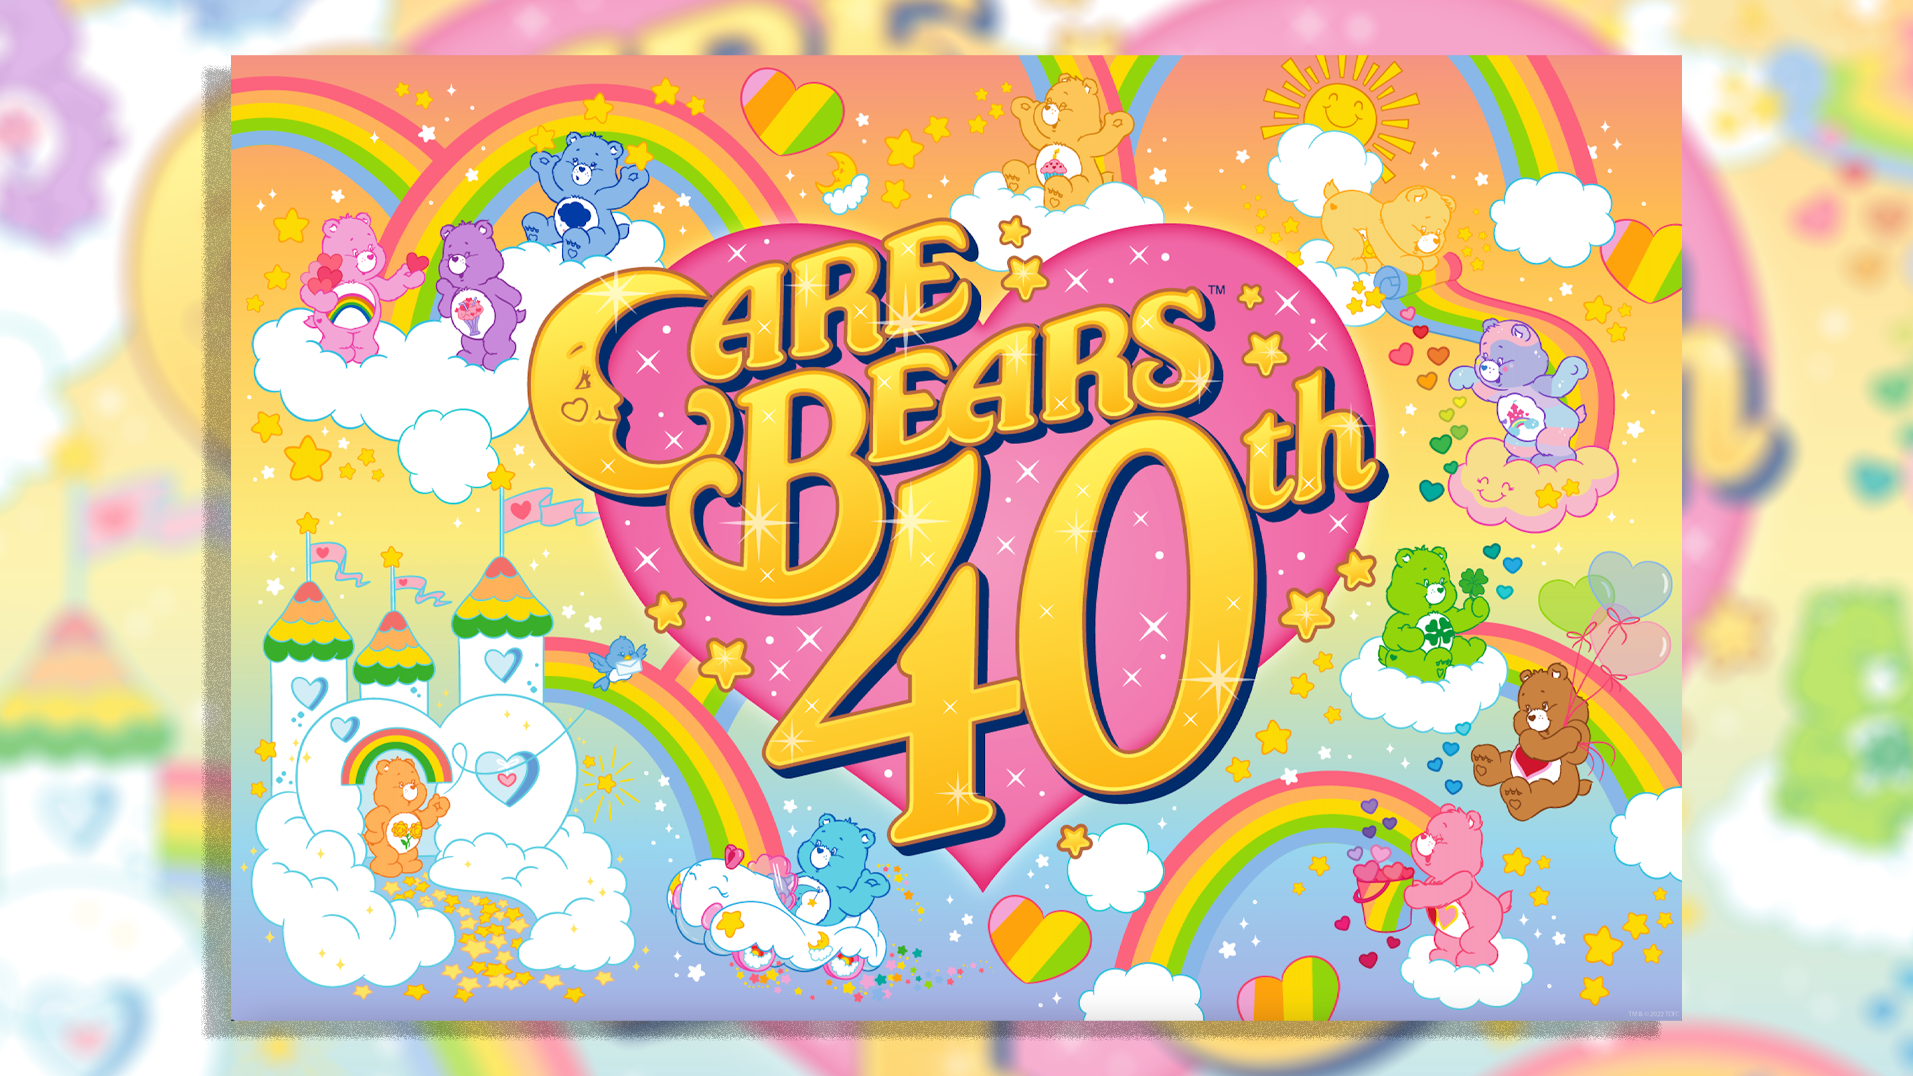 Nelvana Announces Care Bears 40th Anniversary Partnerships